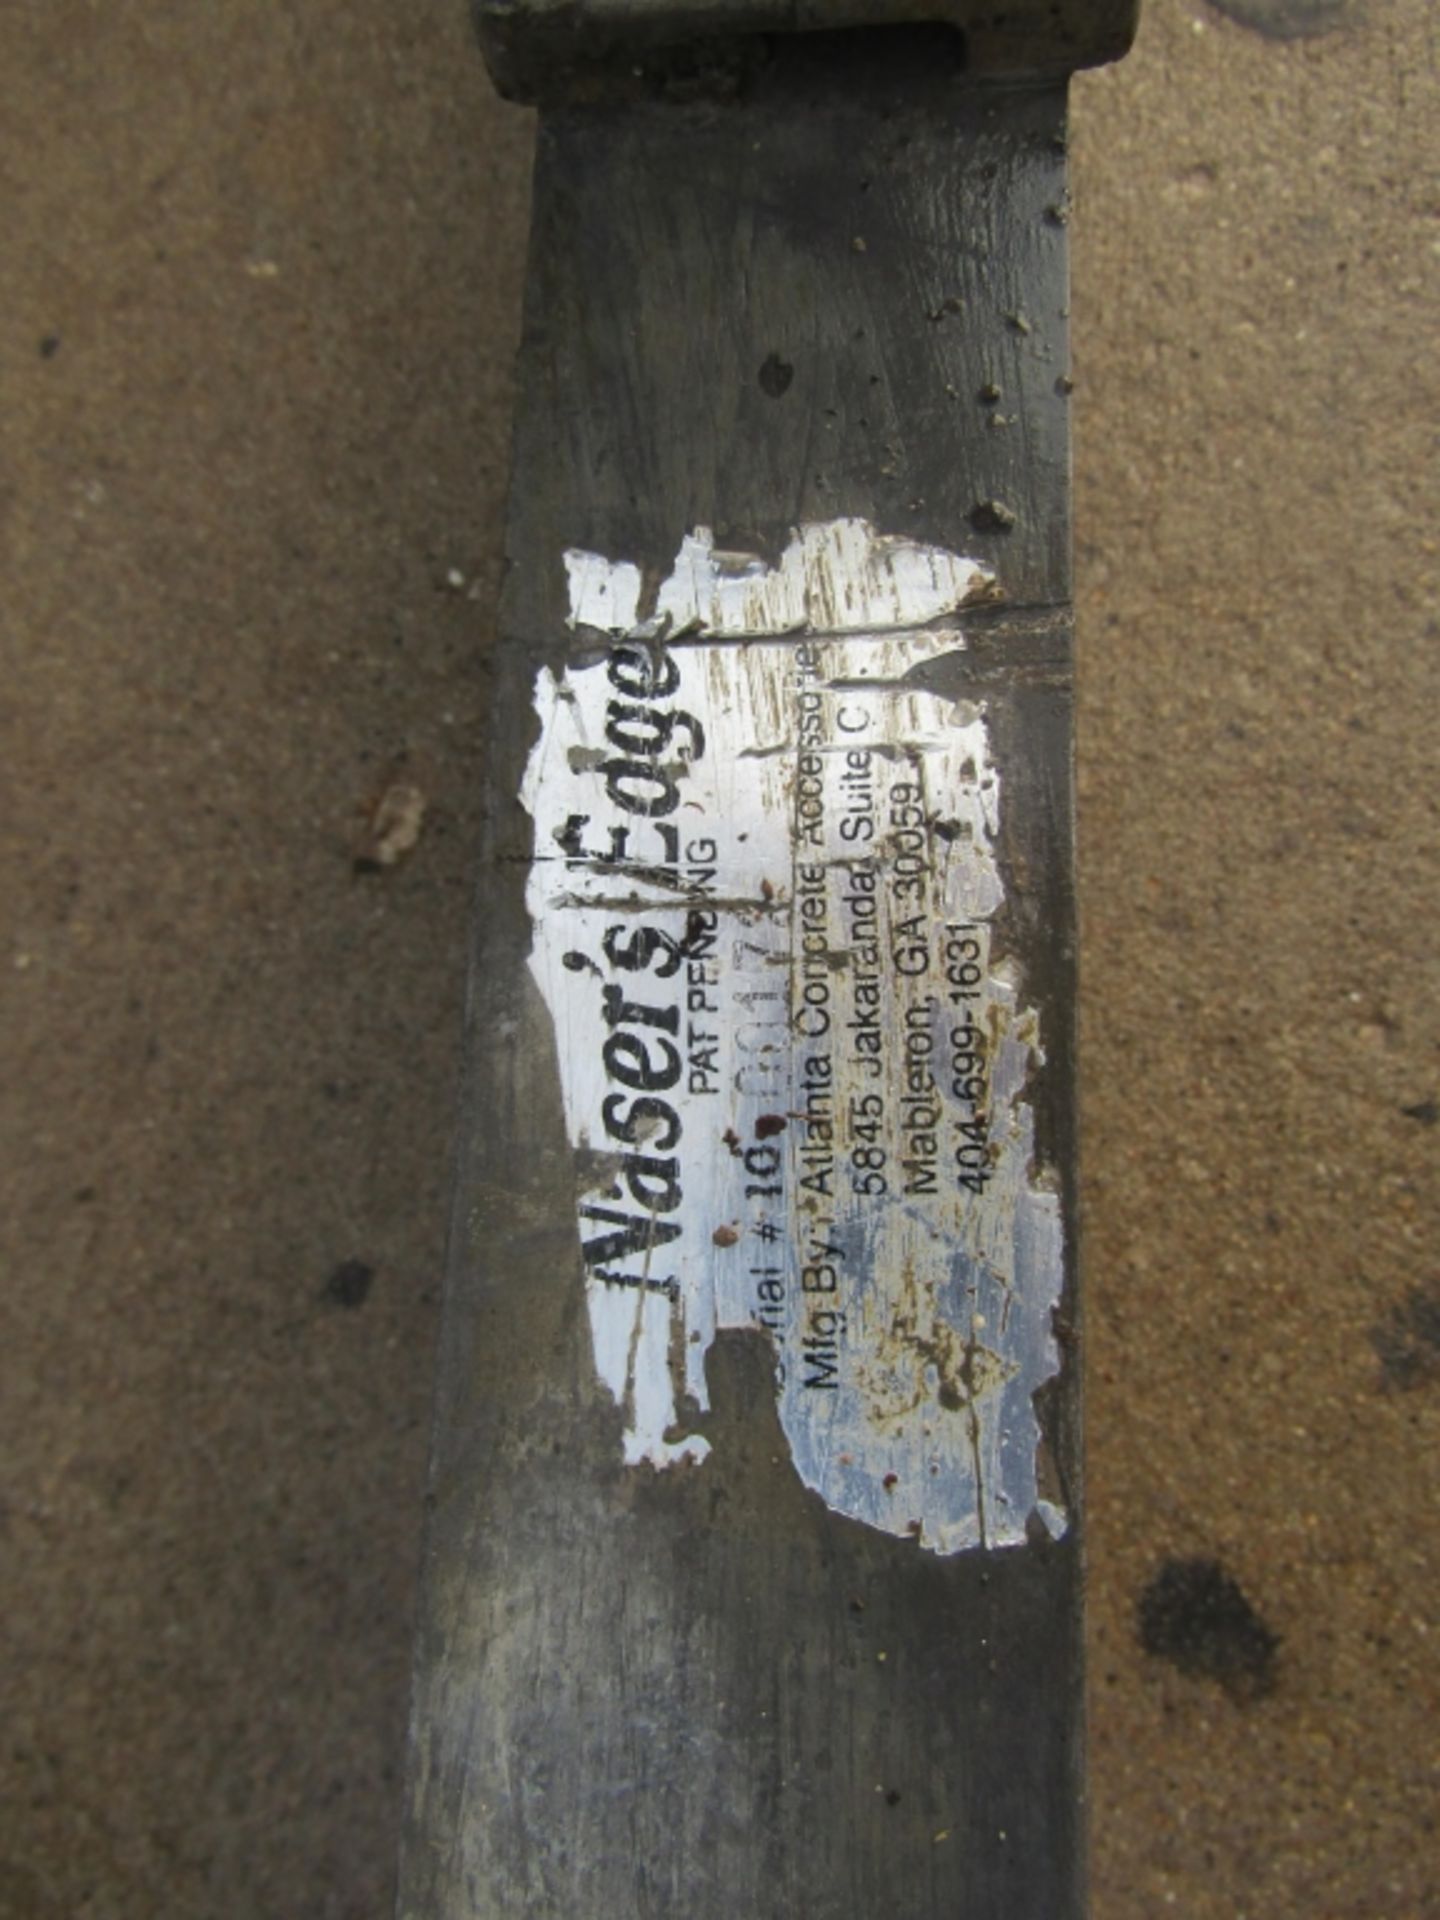 10' Naser's Edge Screed board, Serial # 10 - 00172, - Image 2 of 2